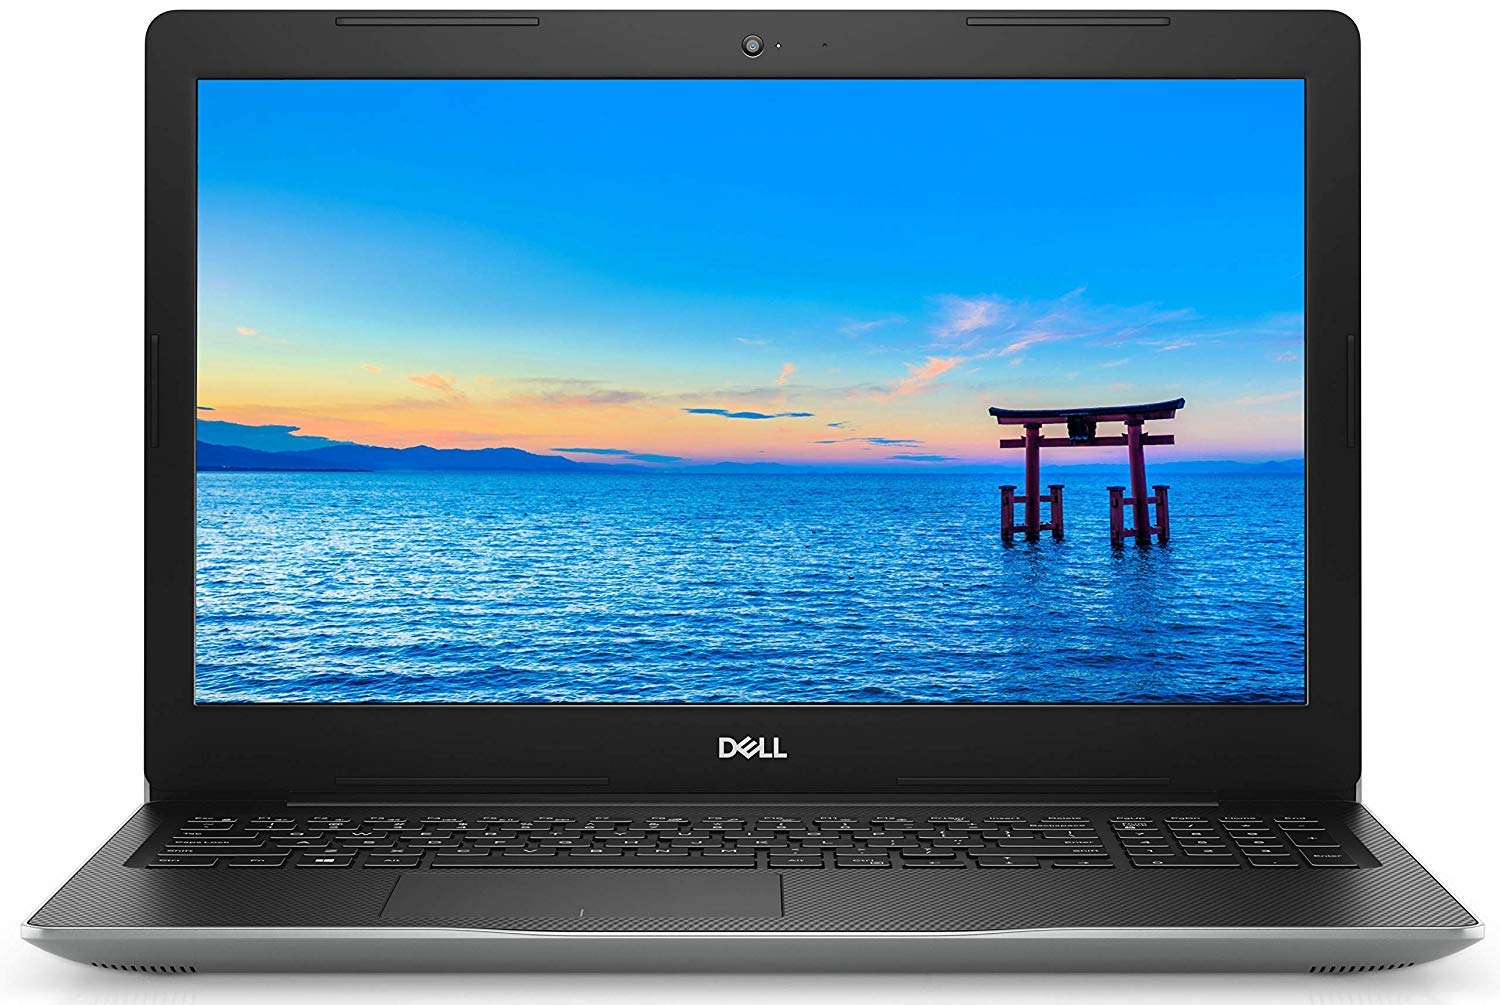  Dell Inspiron 15 3000 laptop